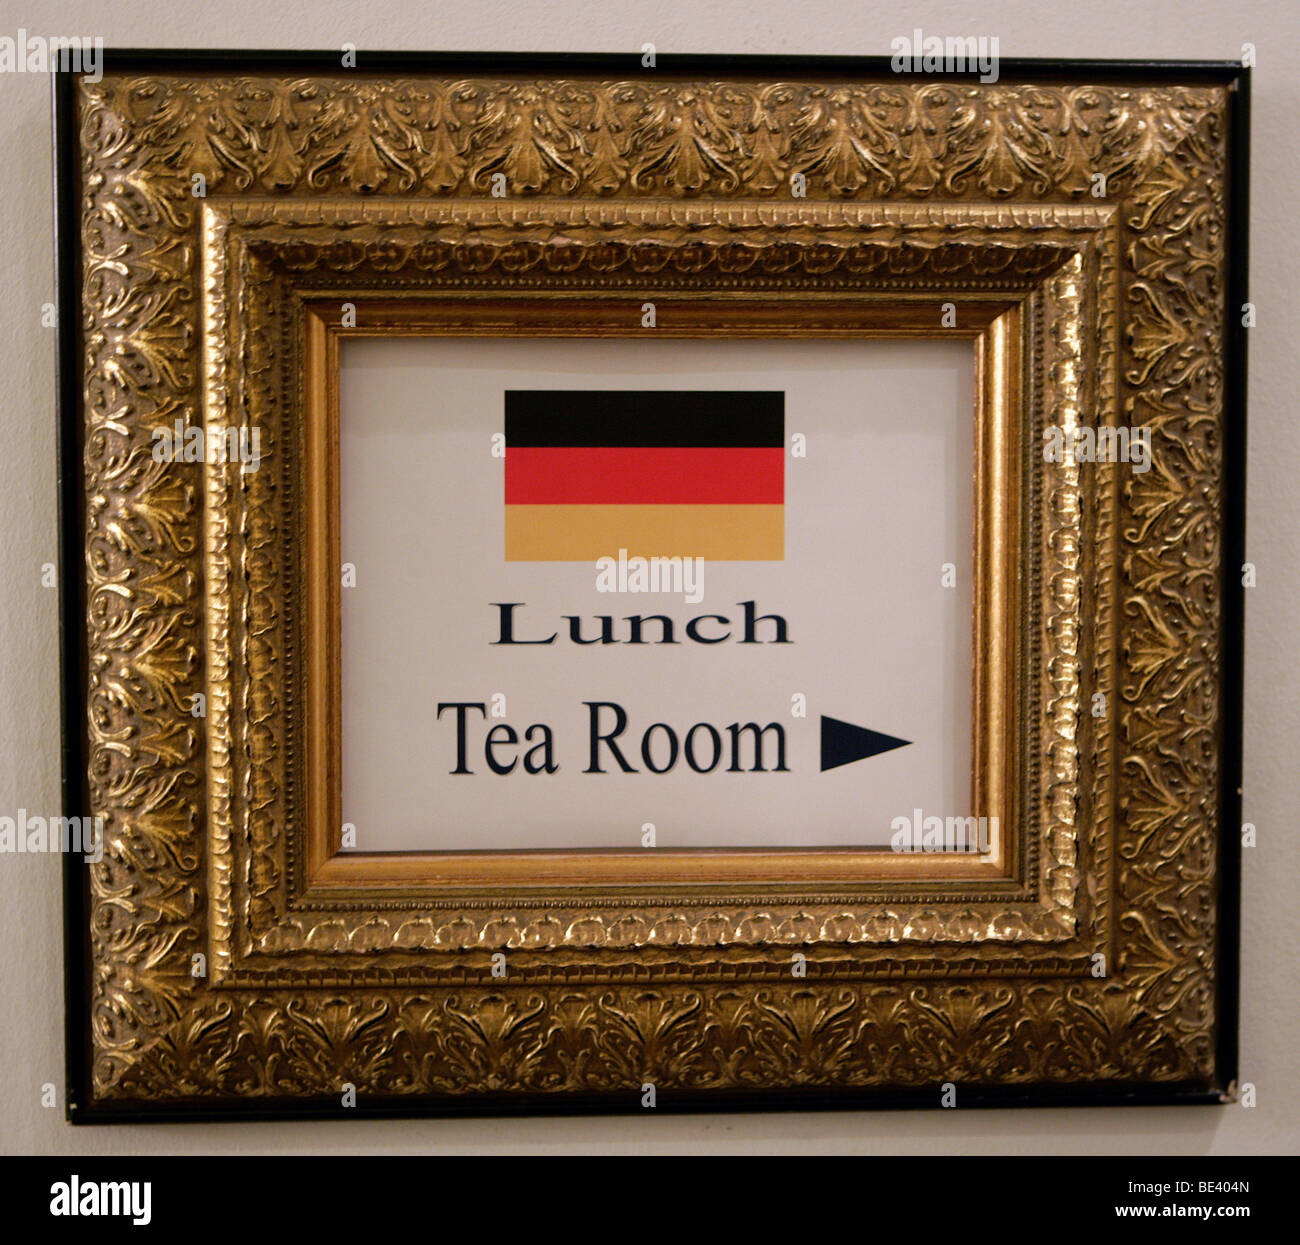 Lunch Tea Room Stock Photo